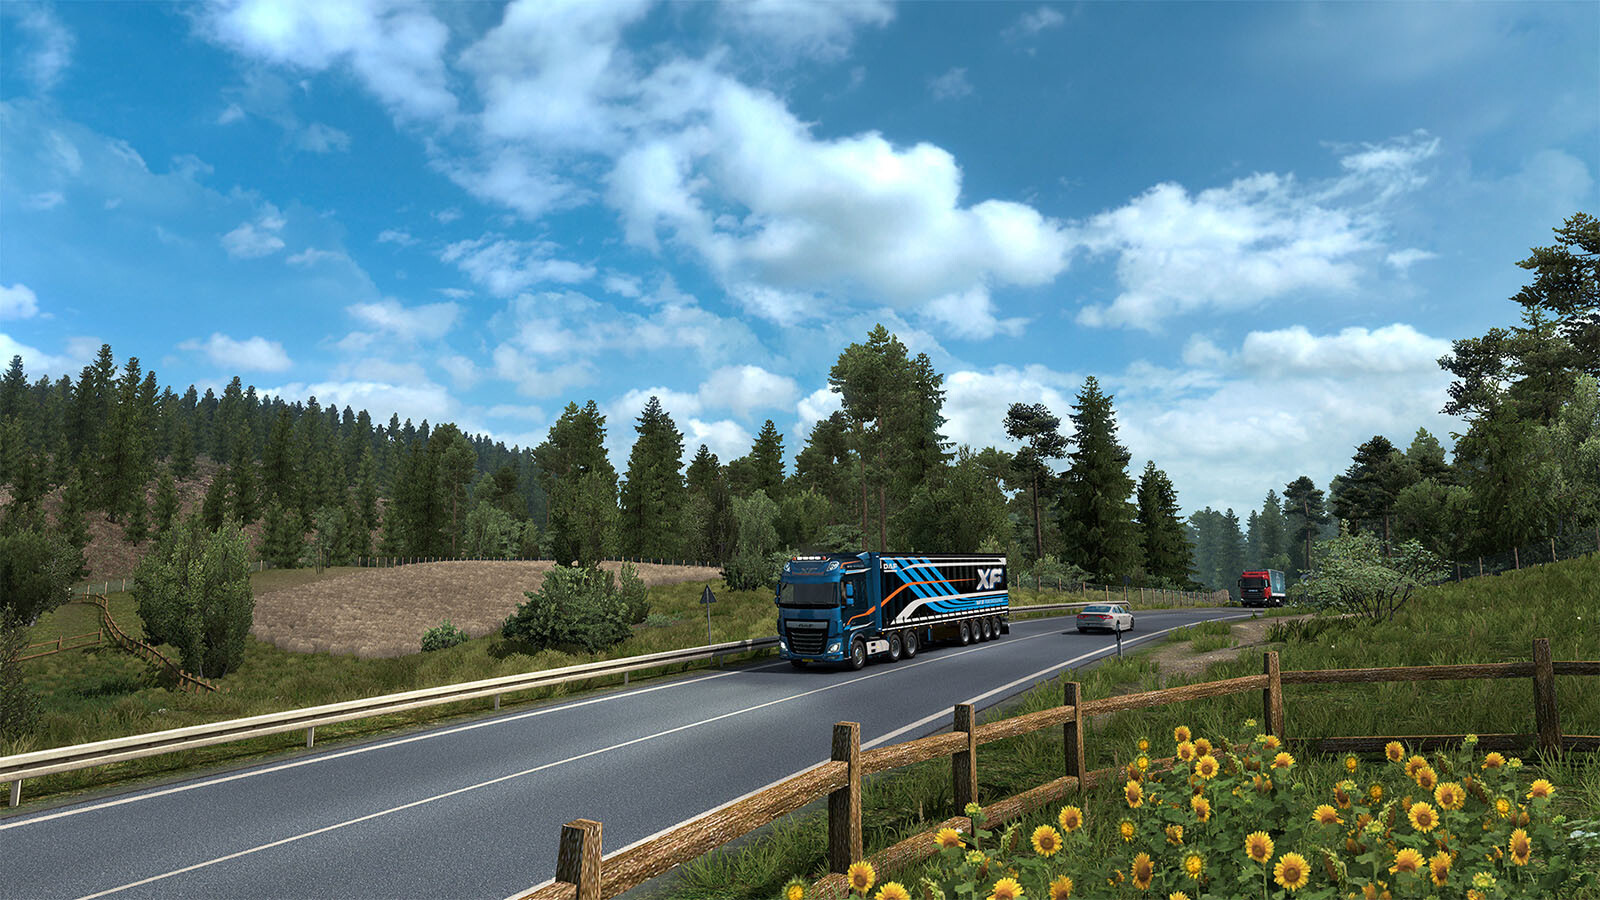 Euro Truck Simulator 2 (ETS 2) - Buy Steam Game PC CD-Key